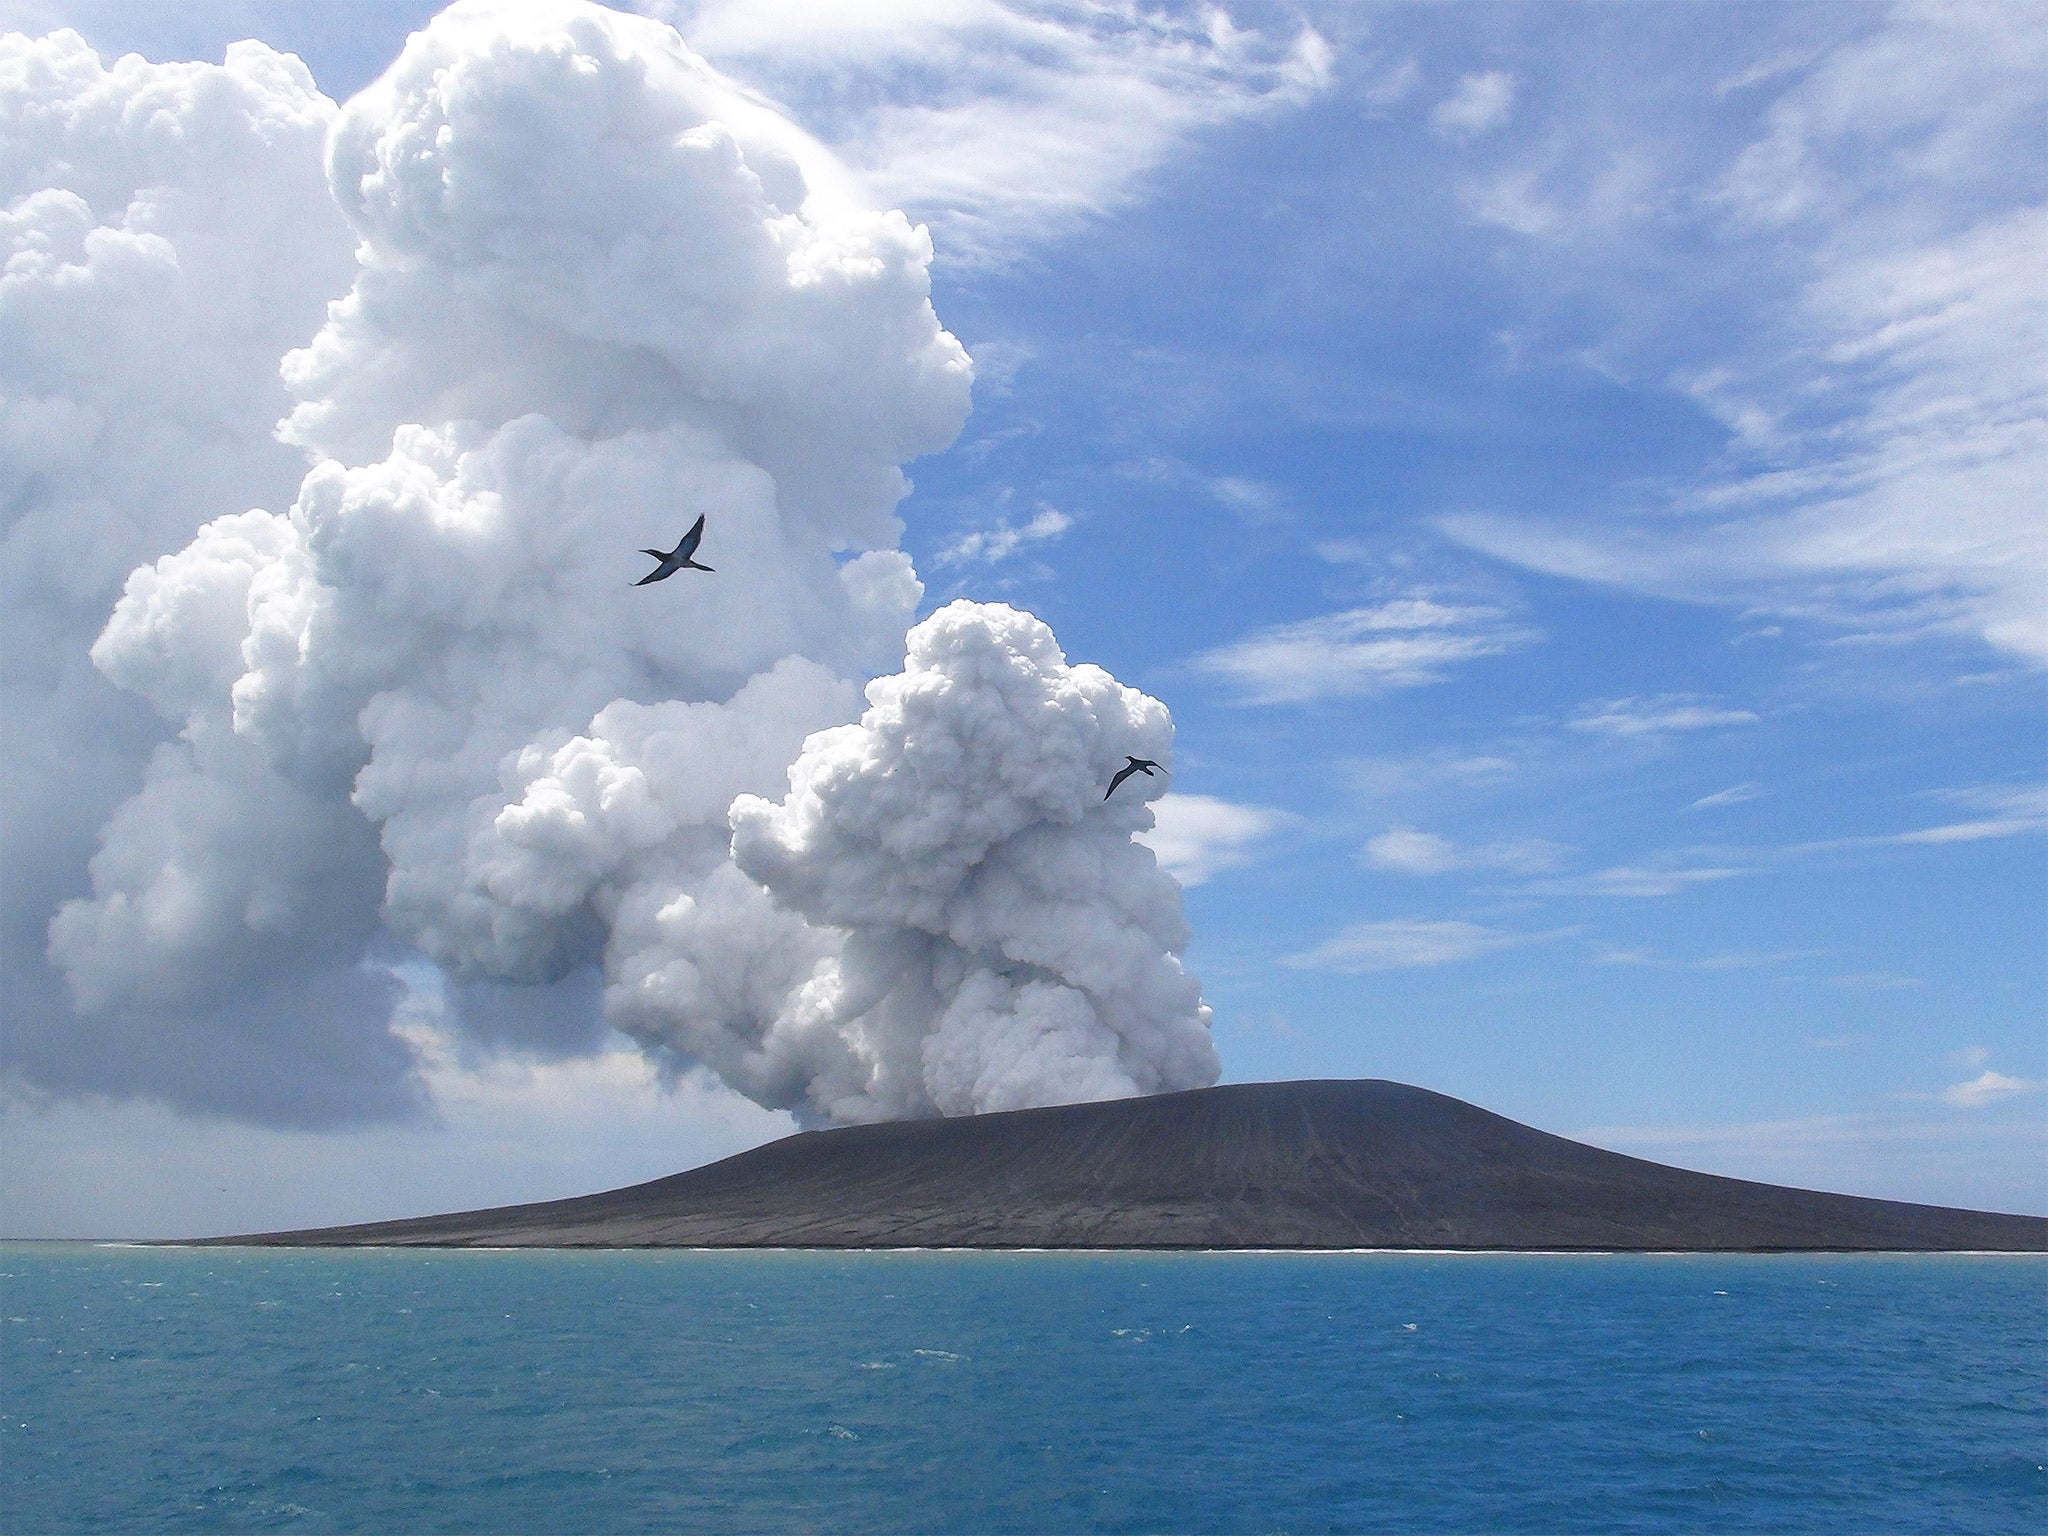 The erupting volcano, 40 miles north of the South Pacific nation of Tonga’s capital, Nuku’alofa